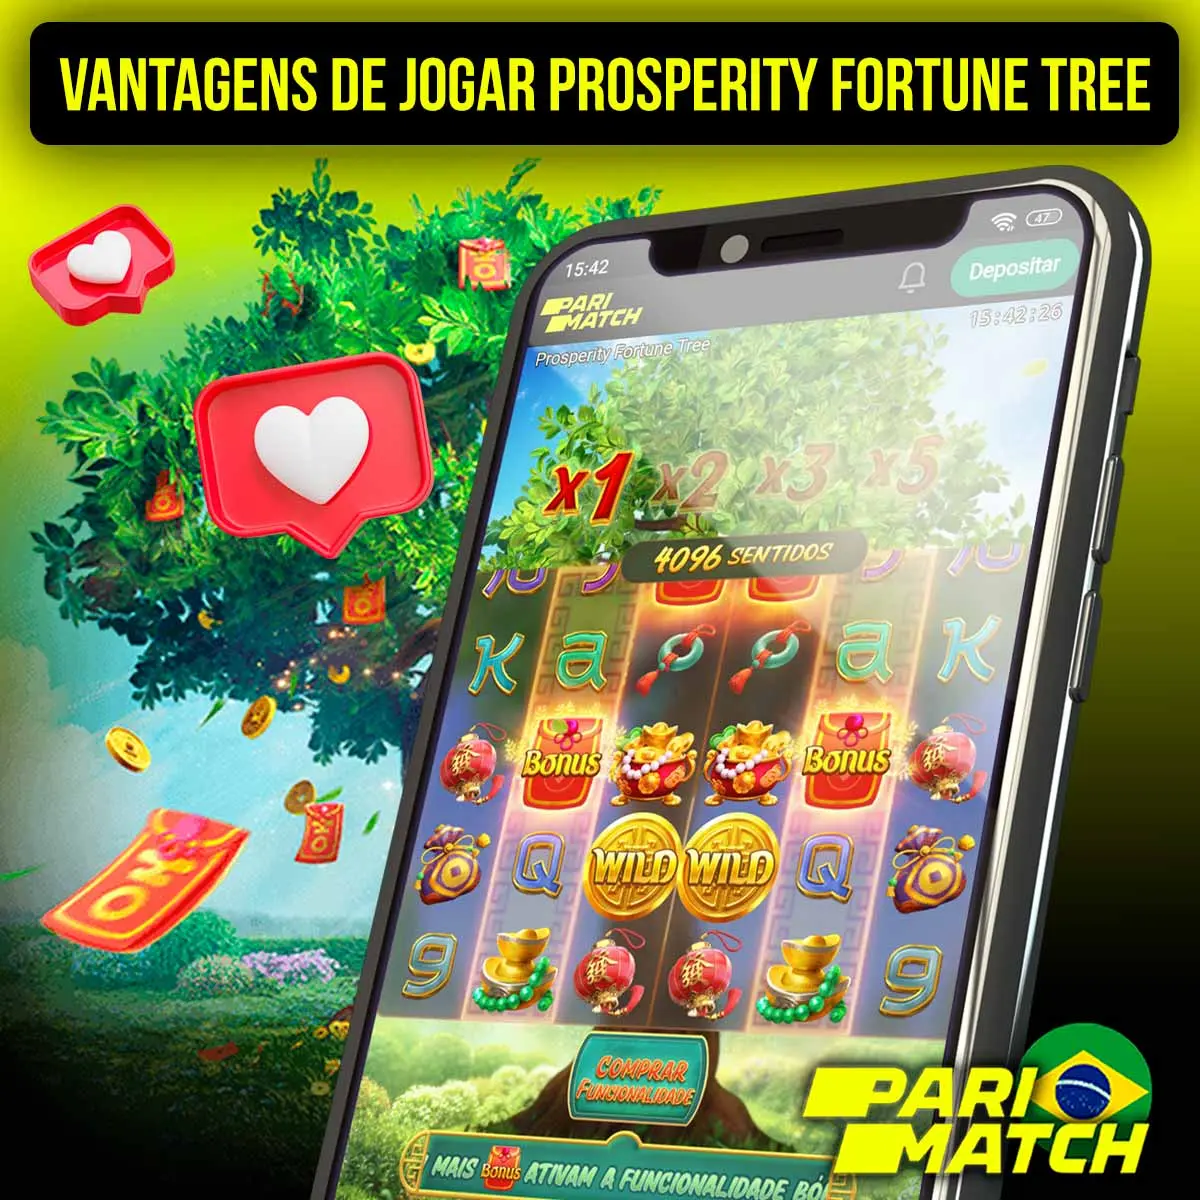 Vantagens de jogar na plataforma Parimatch Prosperity Fortune Tree